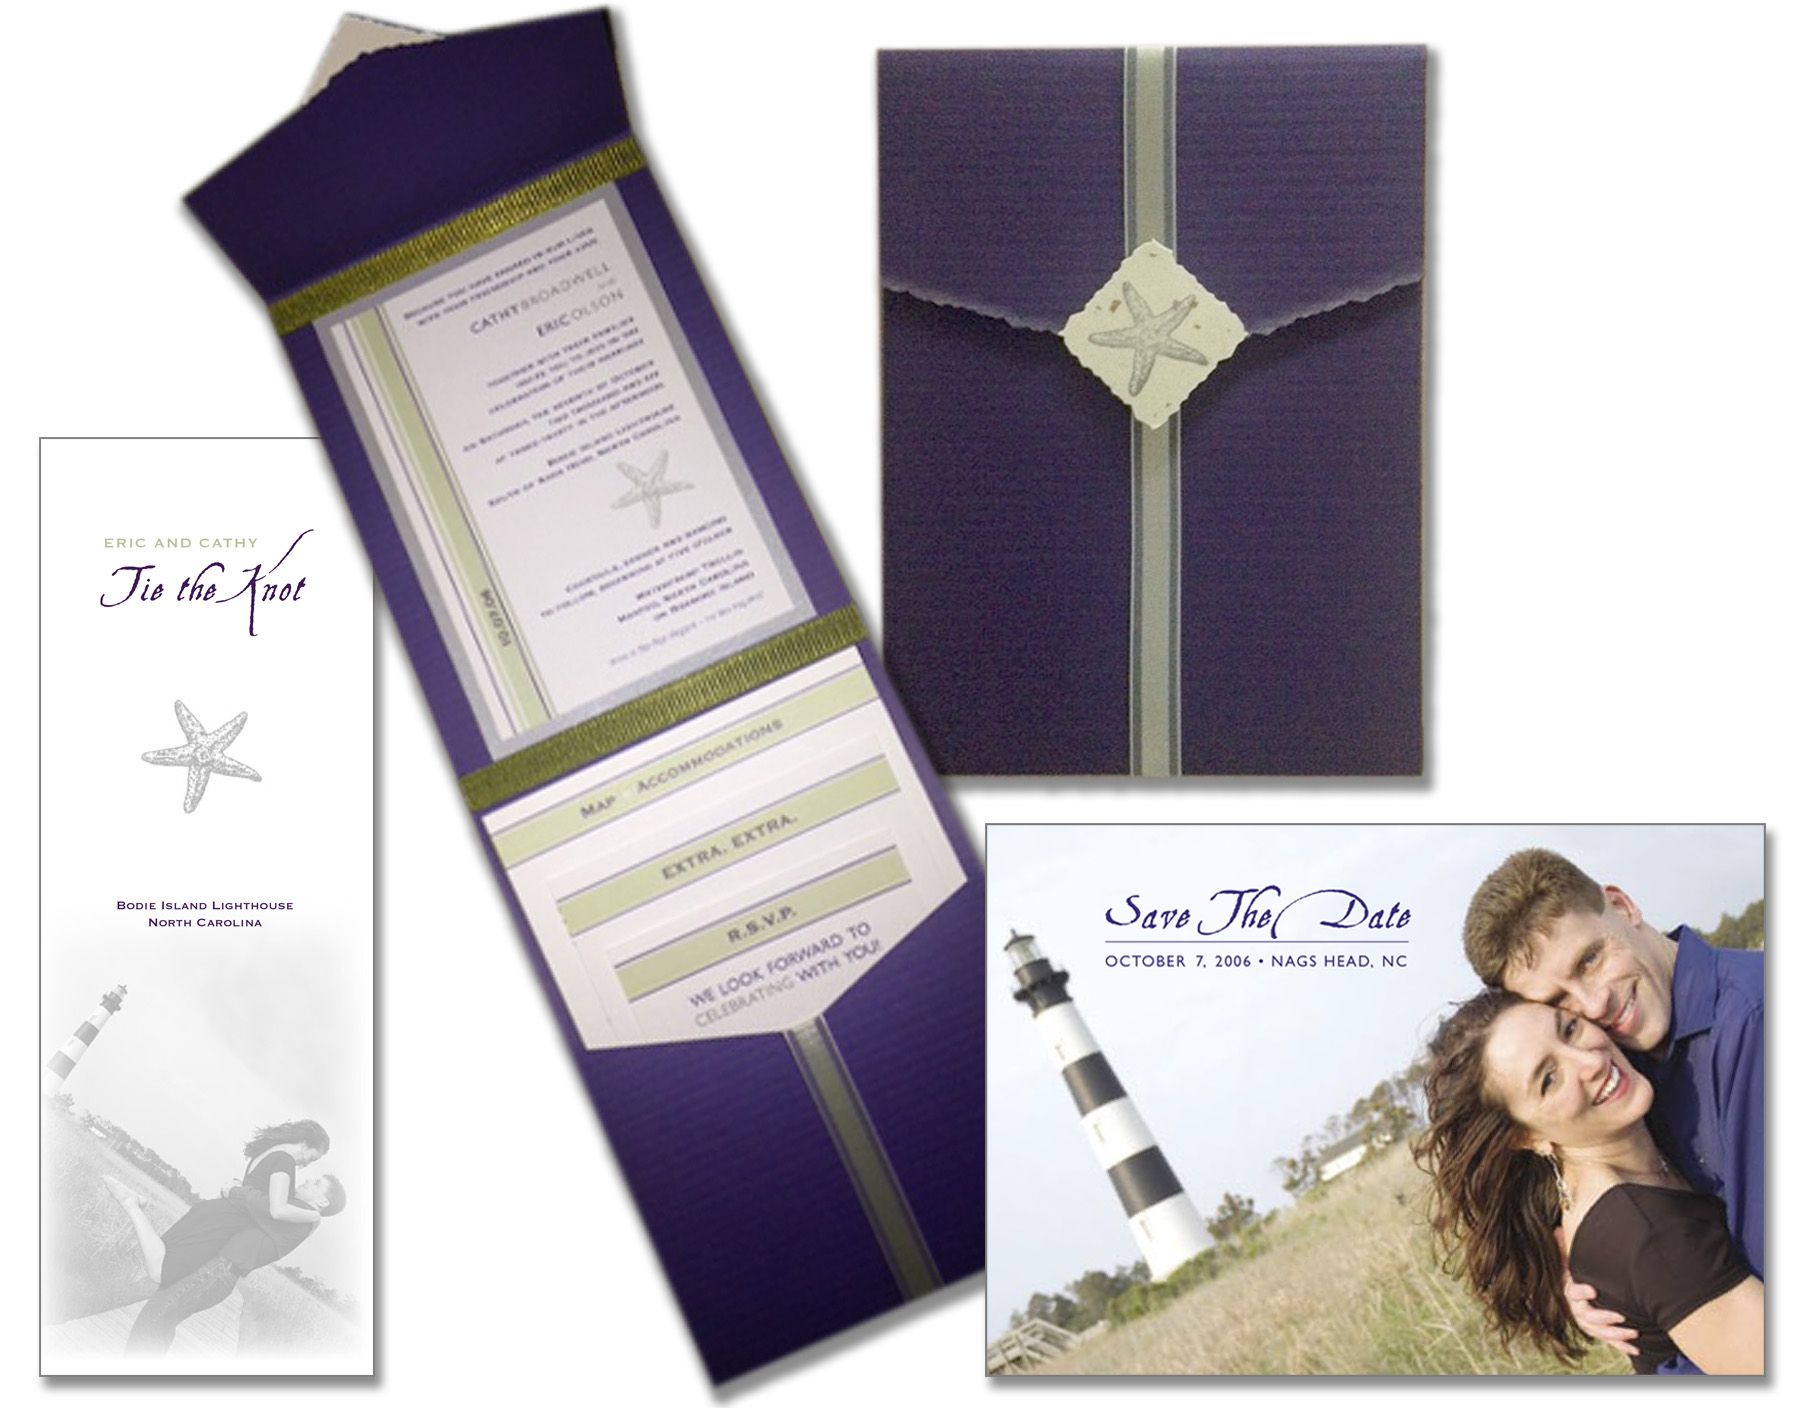 Eric Olson & Cathy Broadwell Wedding Invite & Materials